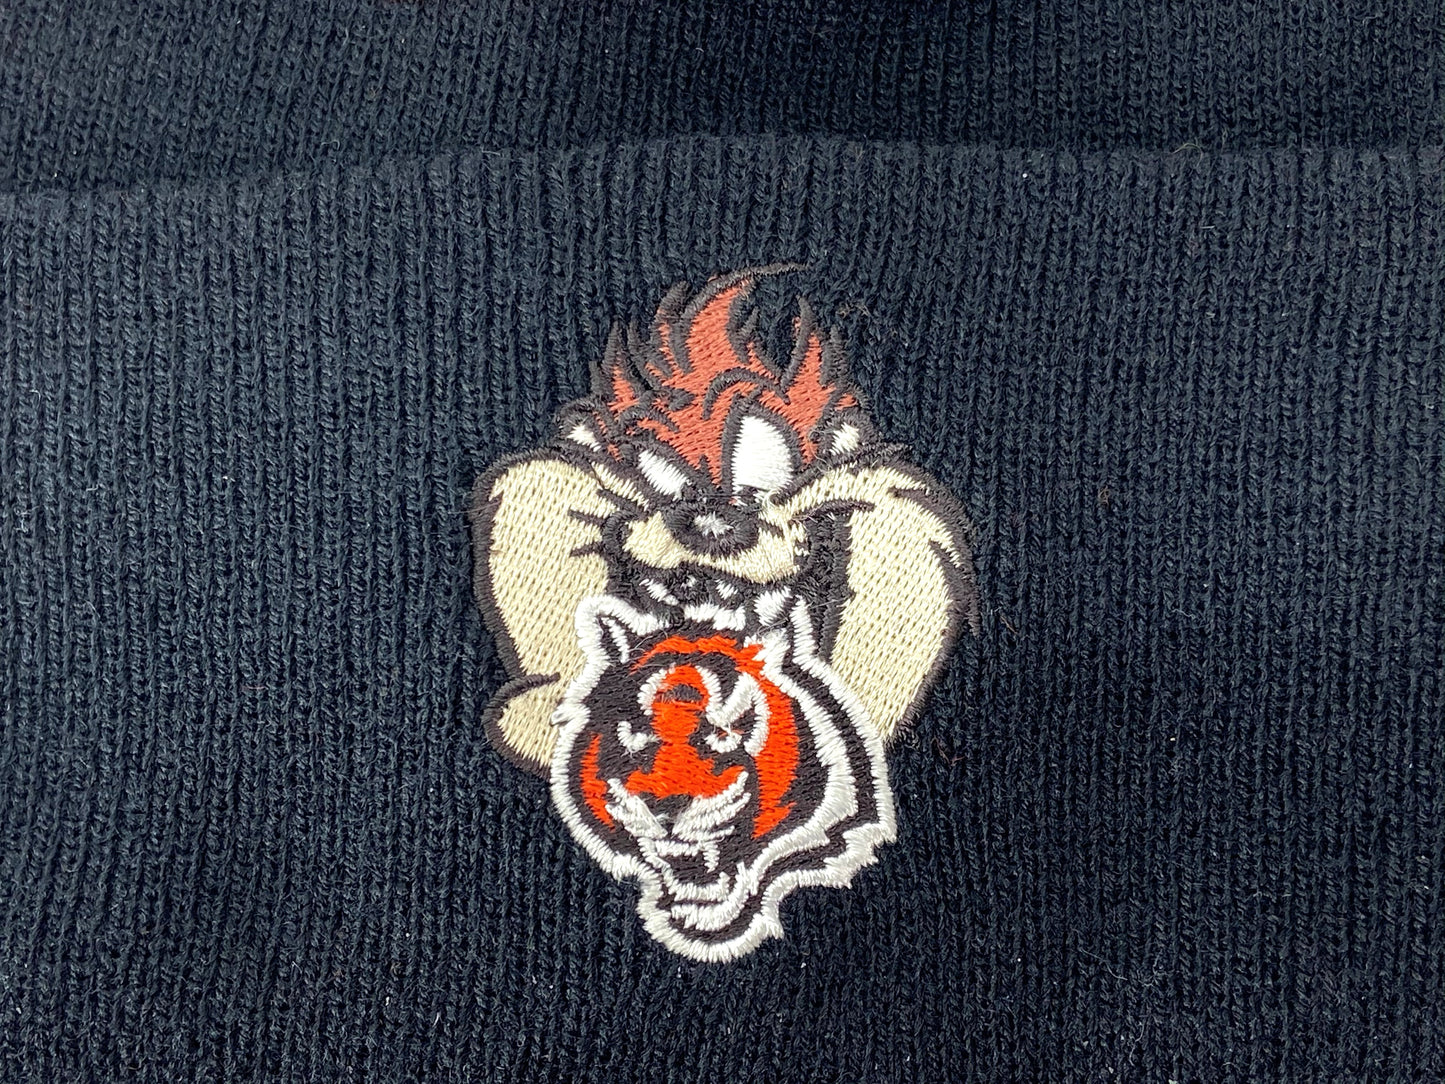 Cincinnati Bengals Vintage 1998 NFL/Looney Tunes Knit Hat By Drew Pearson Marketing